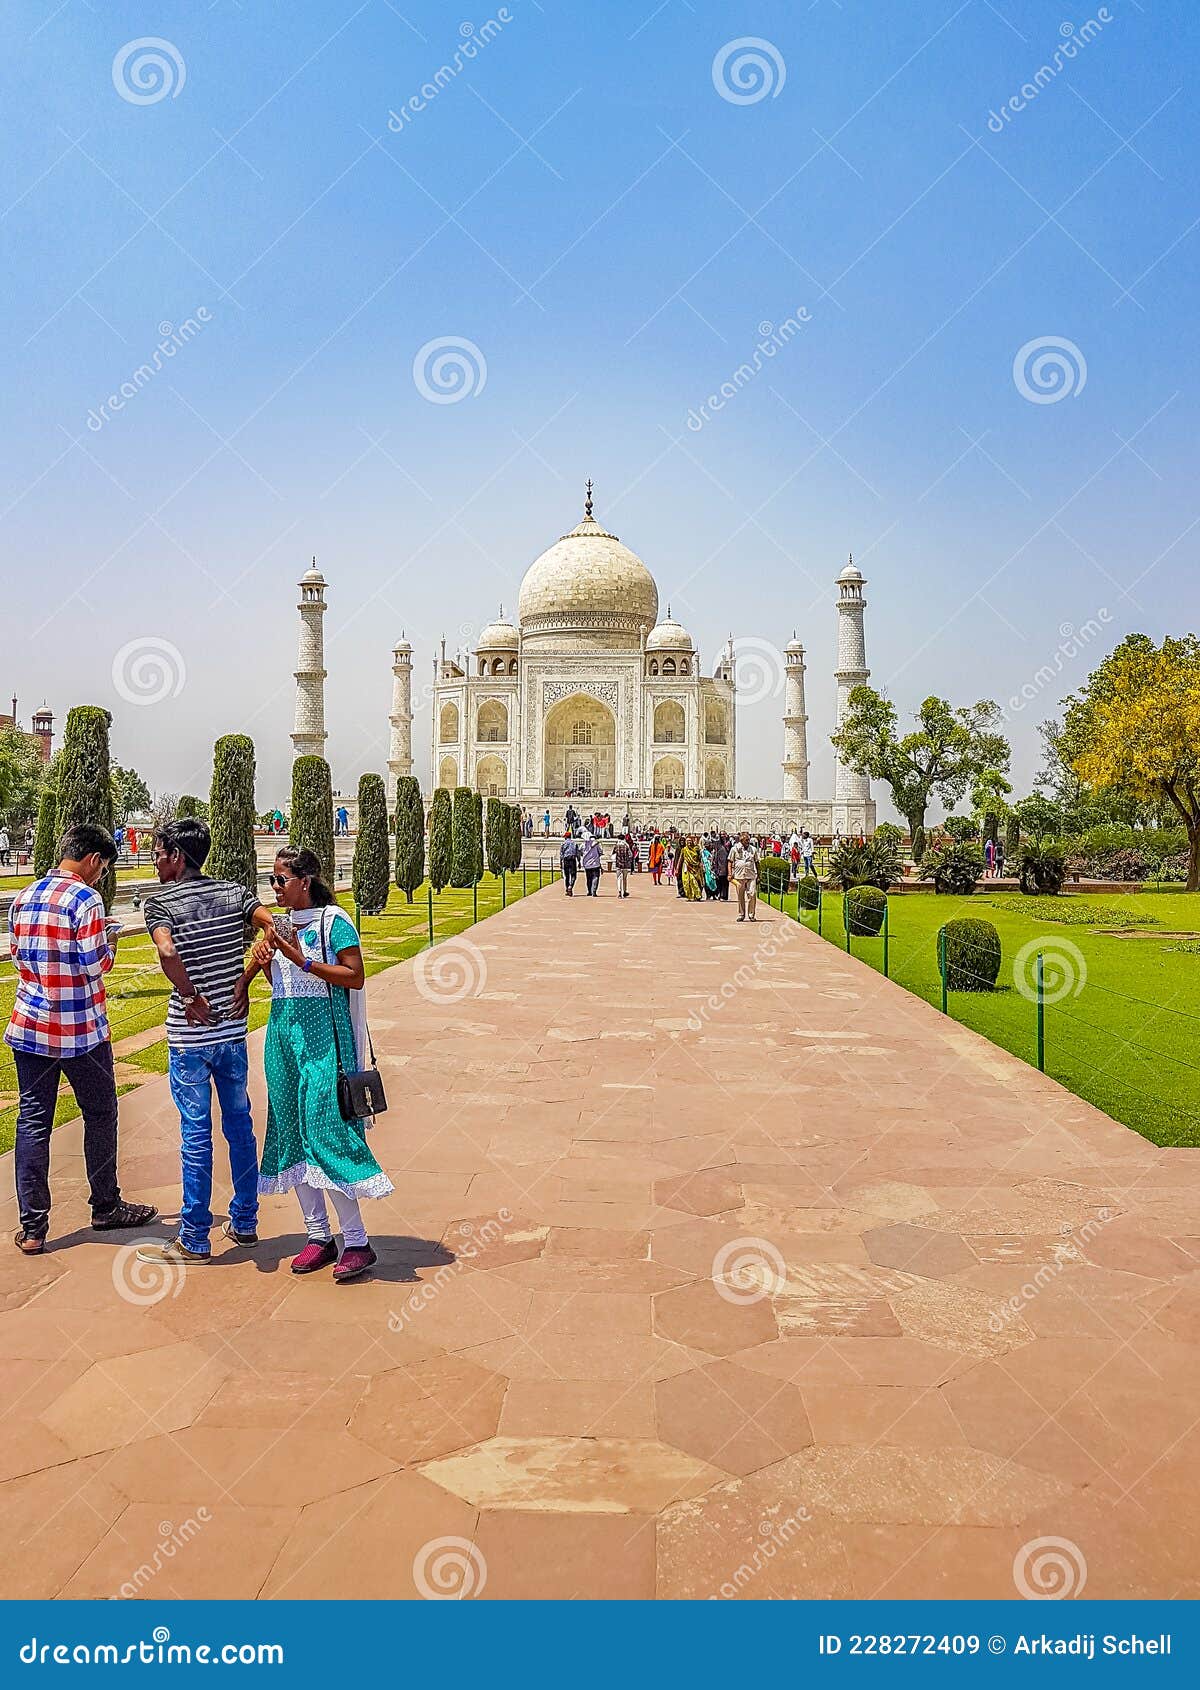 Taj Mahal Panorama in Agra India with Amazing Symmetrical Gardens Editorial  Stock Image - Image of landmark, mahal: 228272409